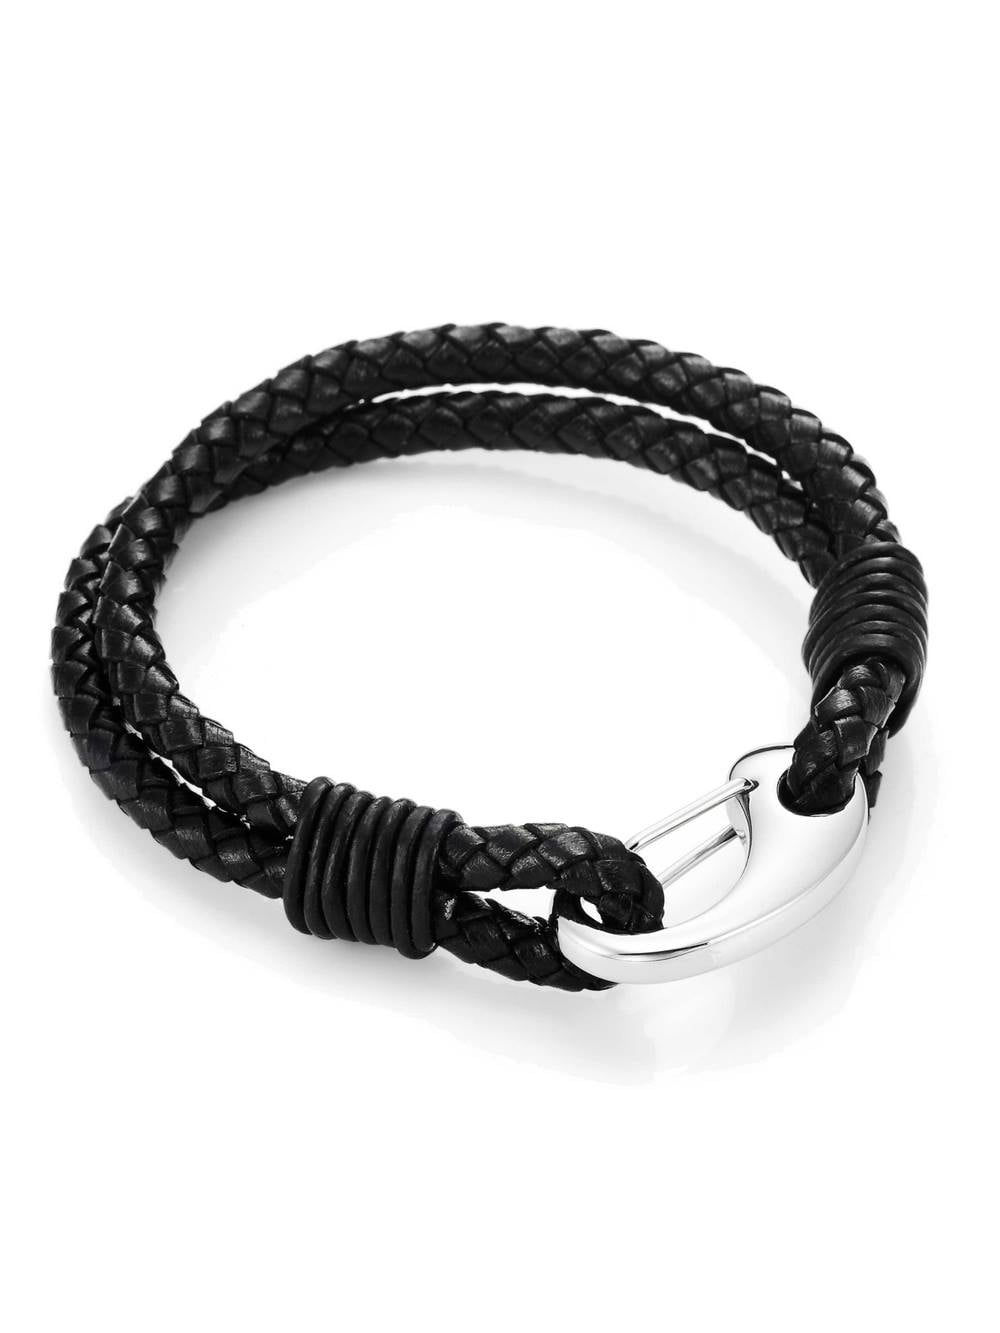 UK Mens Leather Fashion Braided Wristband Bracelet Bangle Stainless Steel Clasp